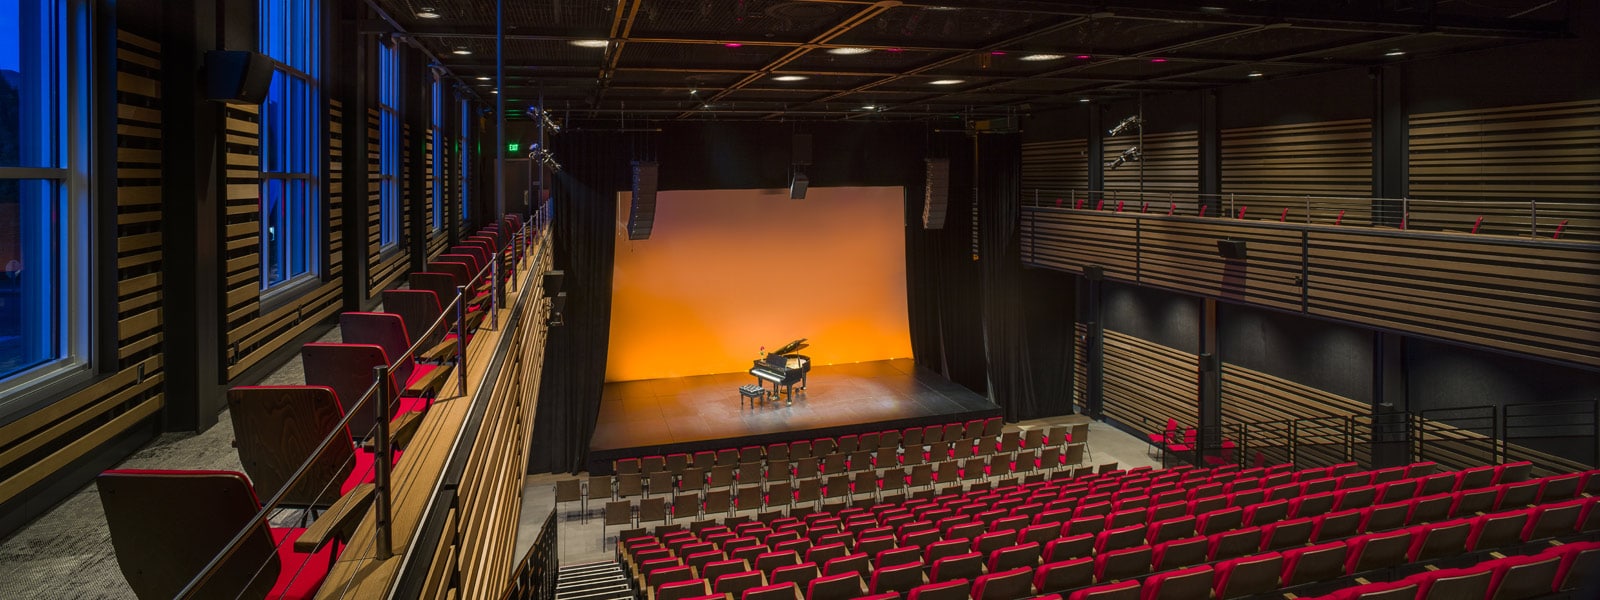 Argyros Performing Arts Center